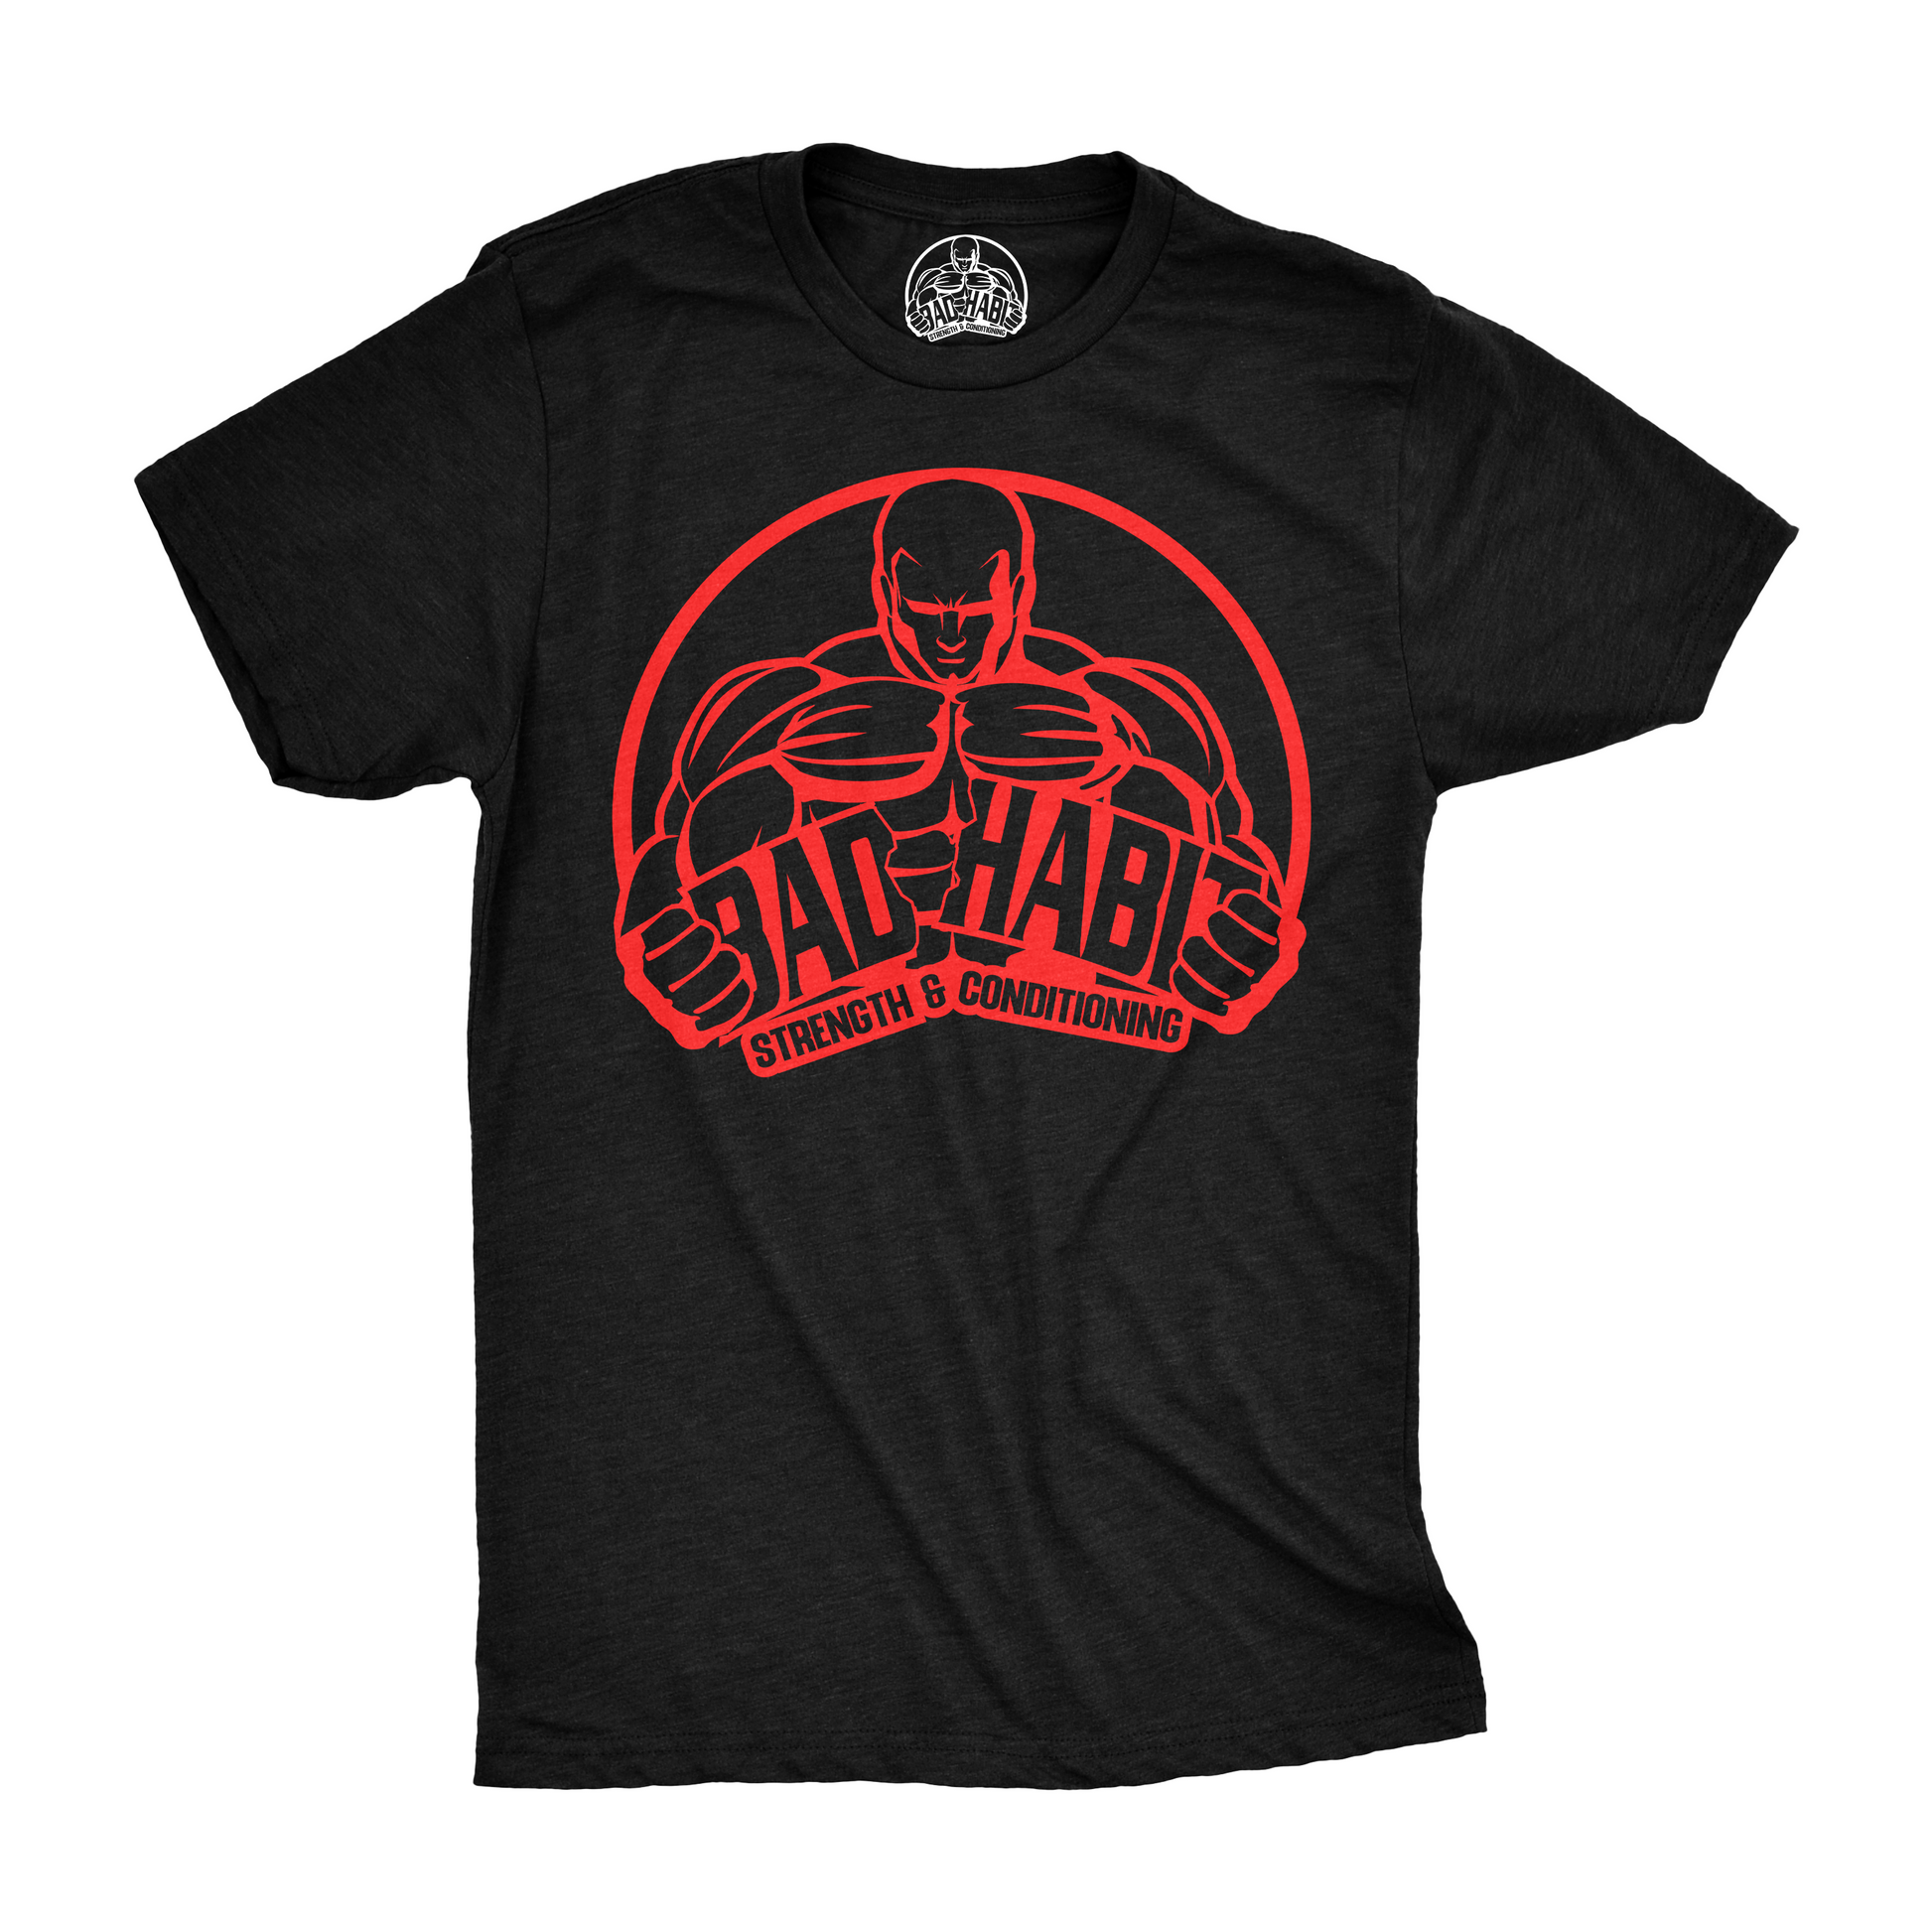 Bad Habit Logo Original T-Shirt Medium / Black w/ Red Logo